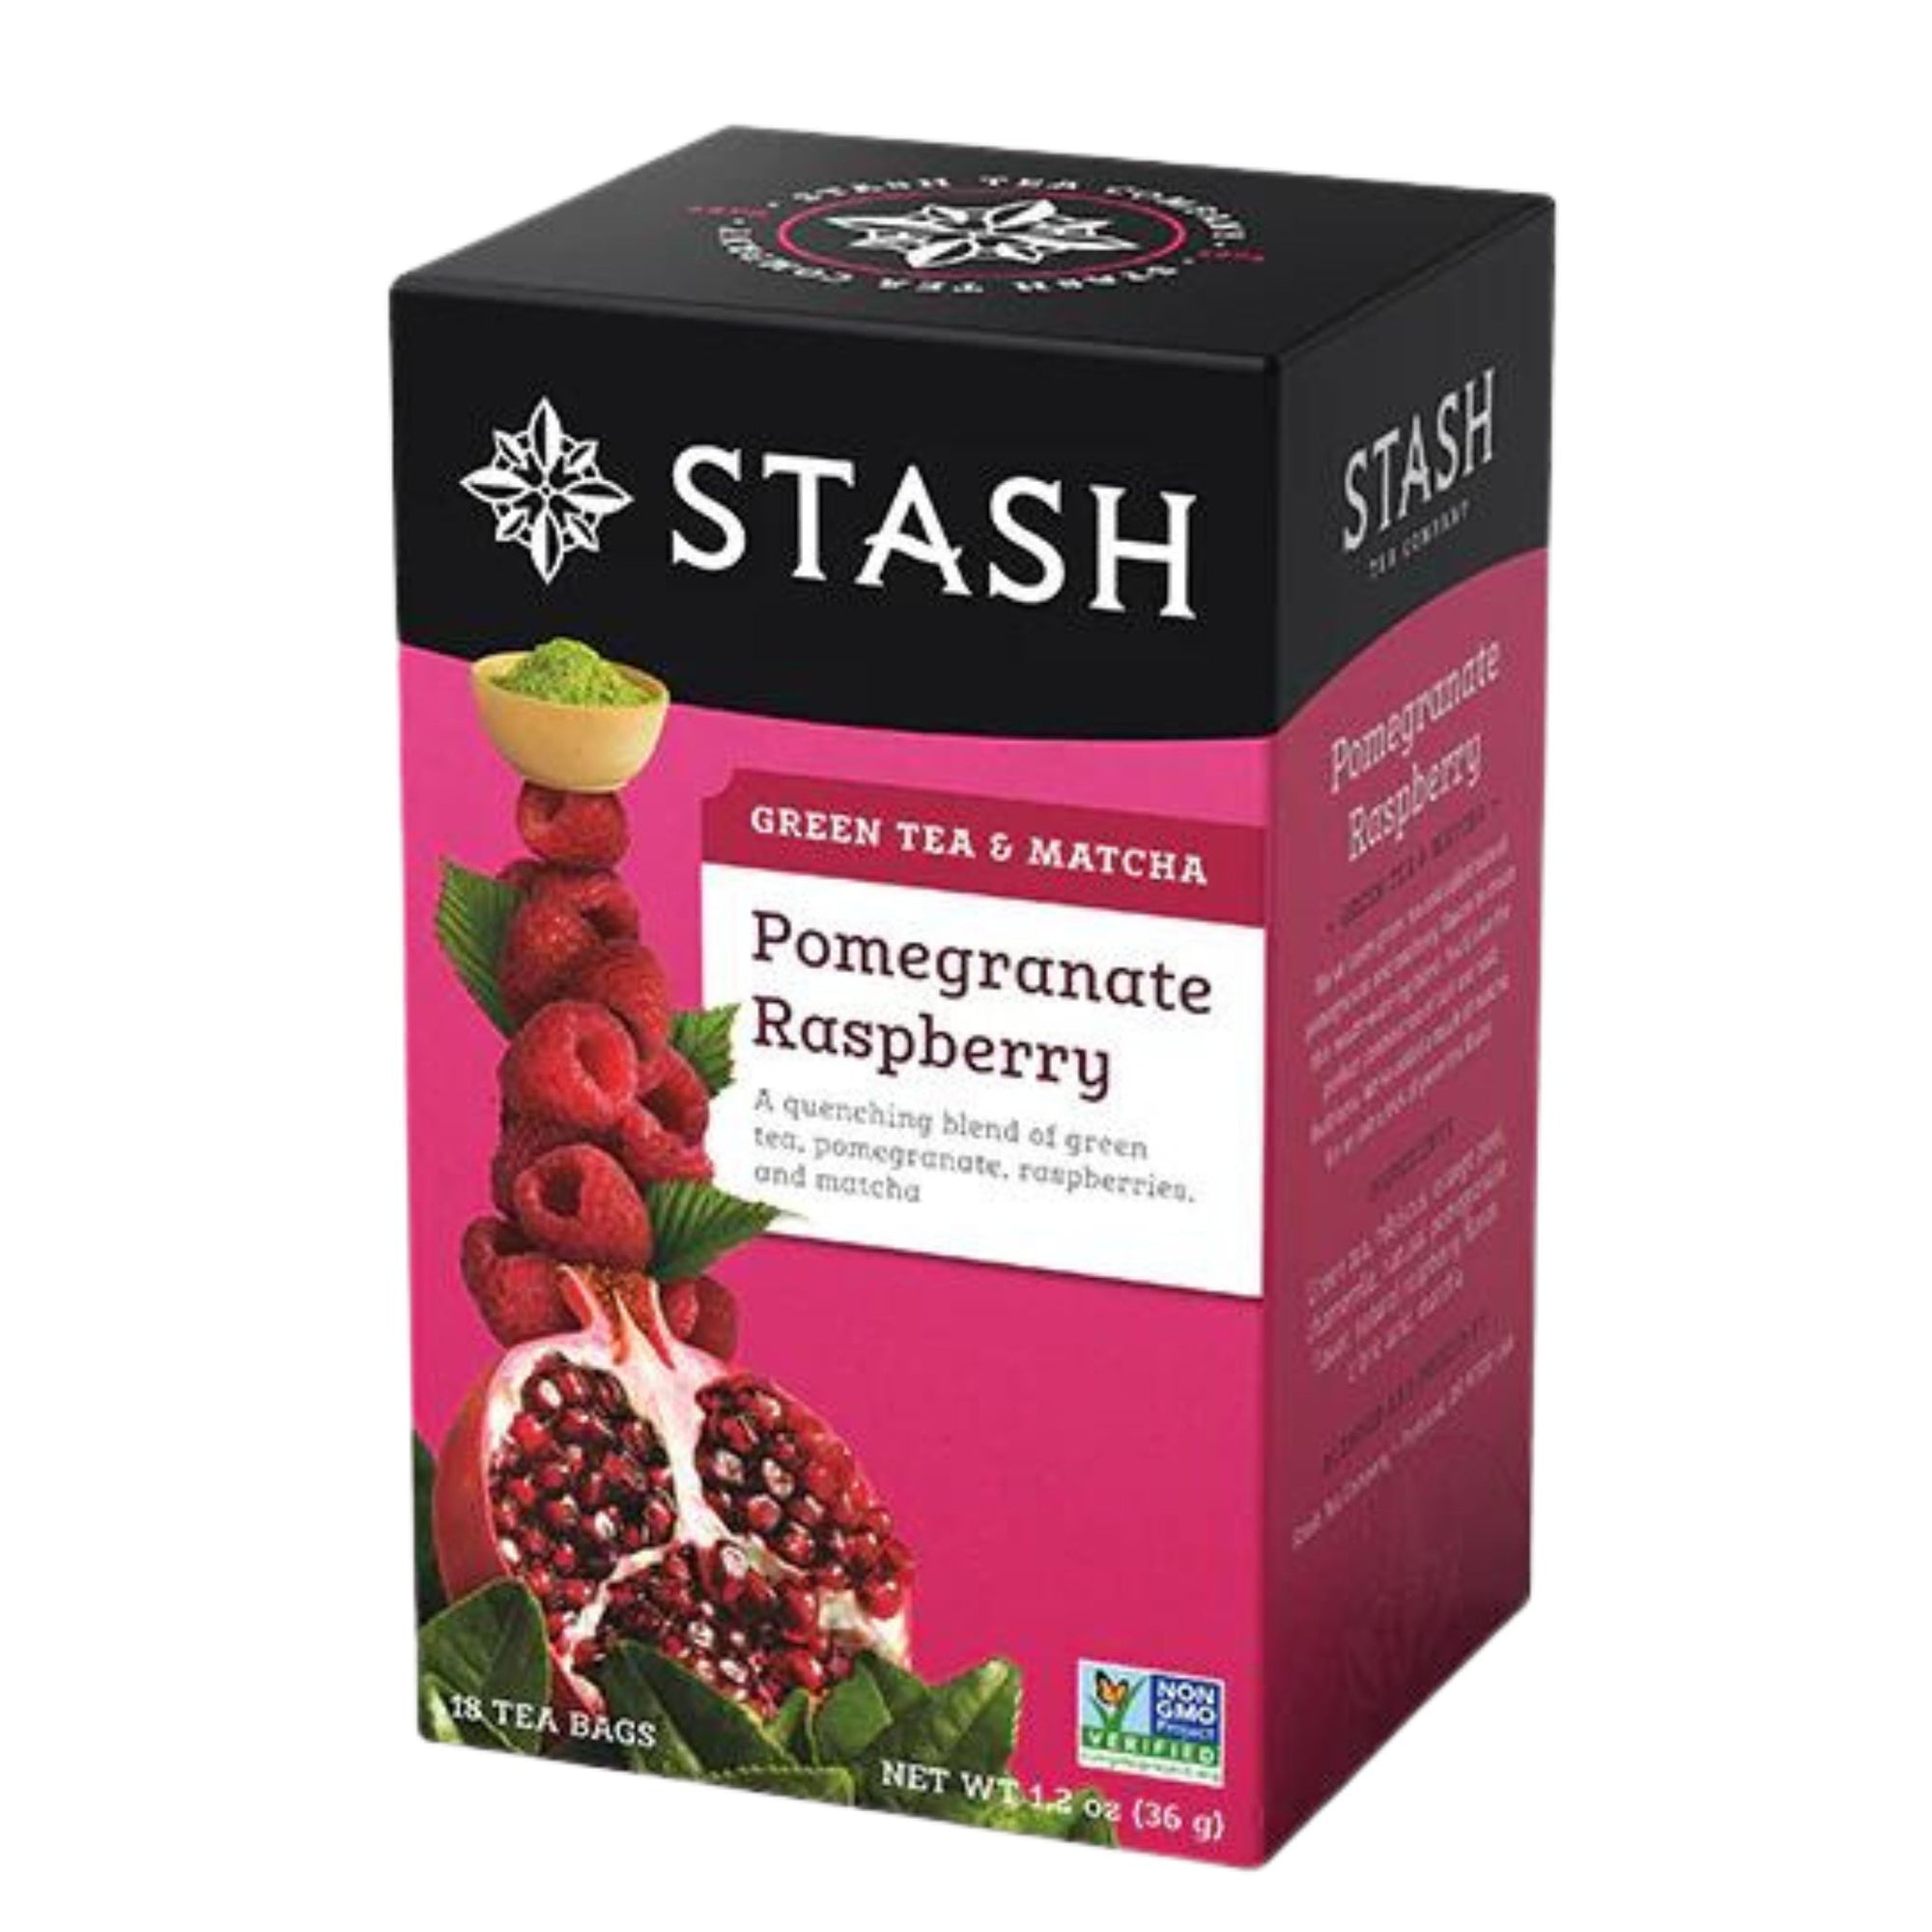 Stash Pomegranate Raspberry Tea - 18 tea bags in a box - A quenching blend of green tea, pomegranate, raspberries and matcha.